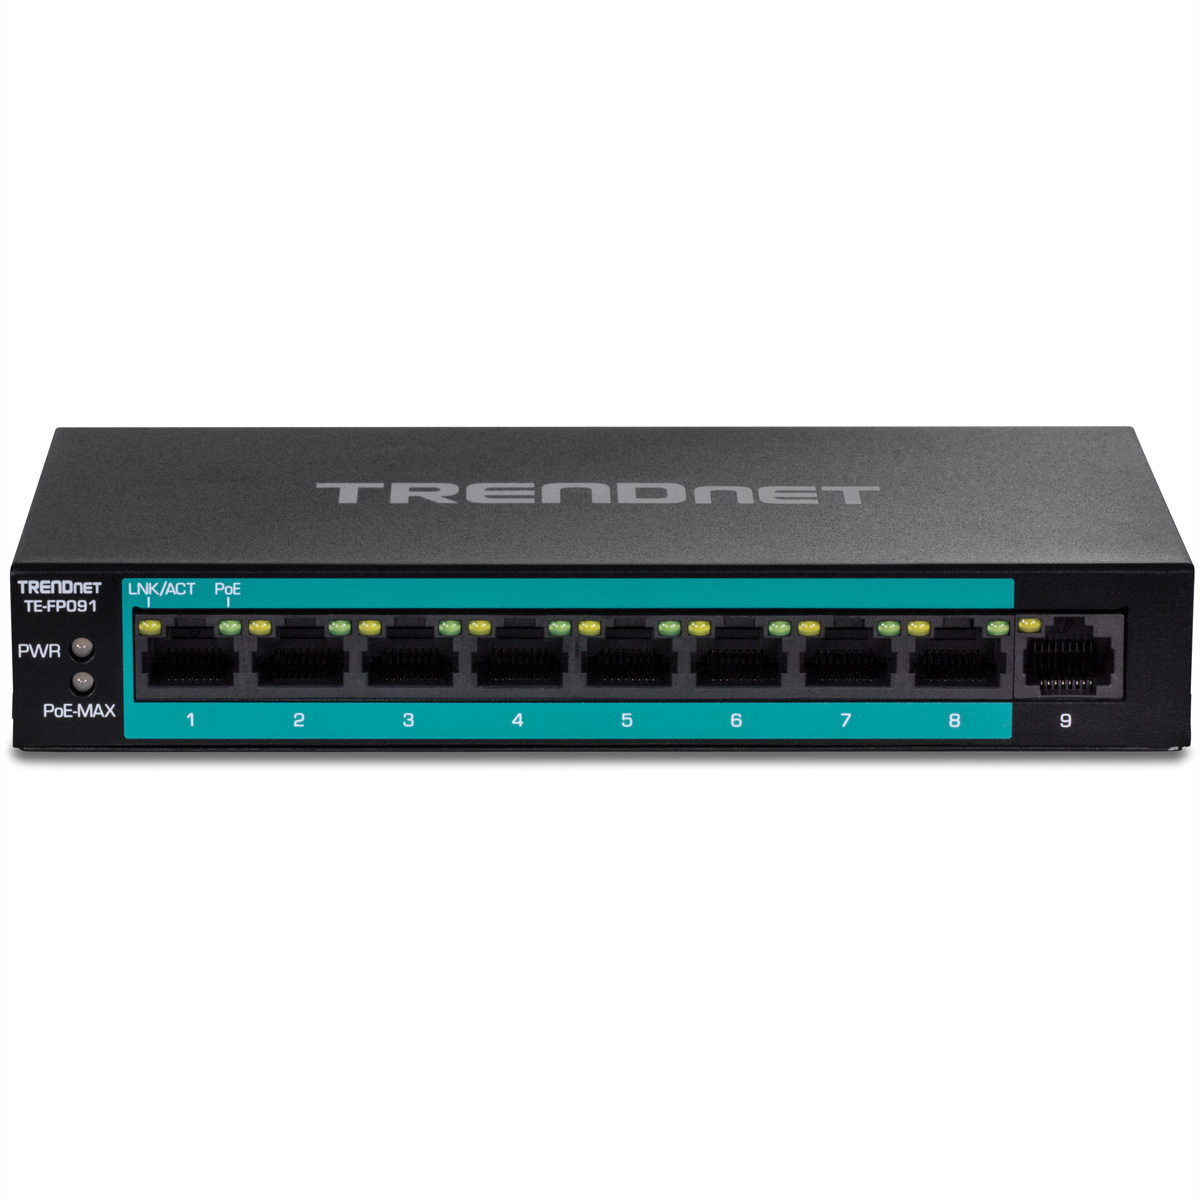 TRENDNET TE-FP091 9-Port PoE+ Fast Fast Switch Long Ethernet Switch Range Ethernet PoE